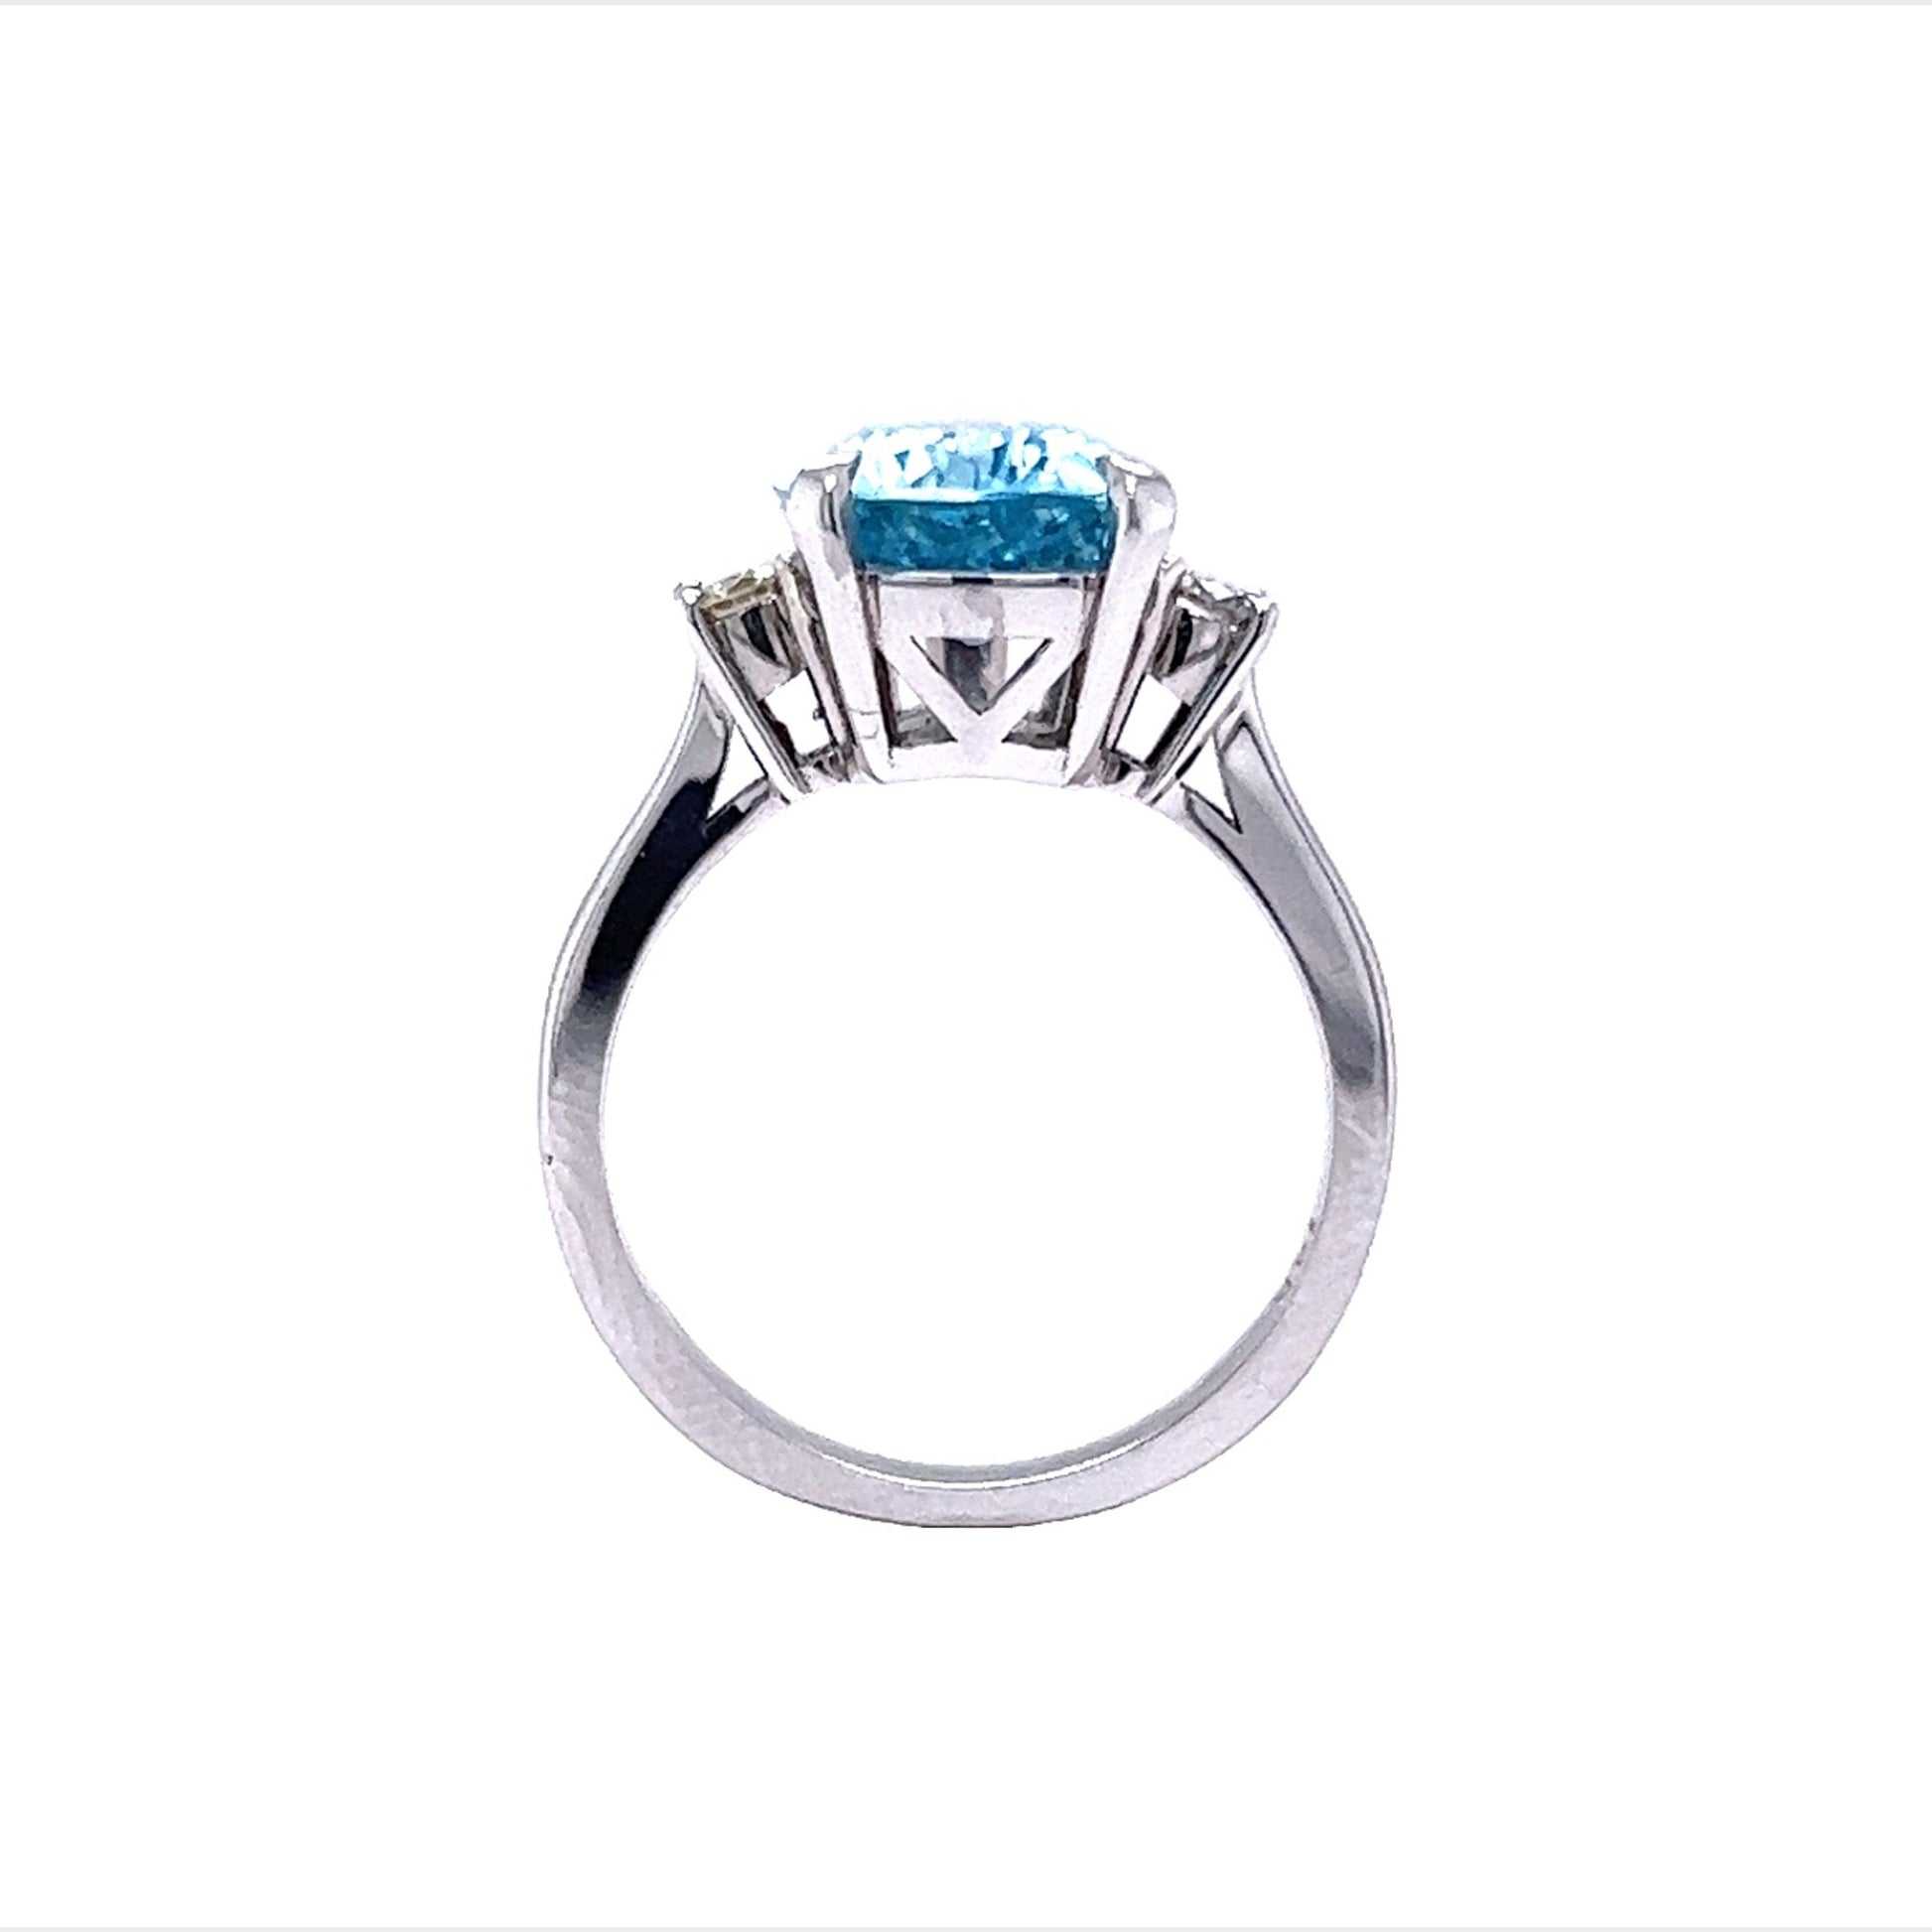 3 Carat Pear Cut Aquamarine Ring w/ Diamond Accents in 14k